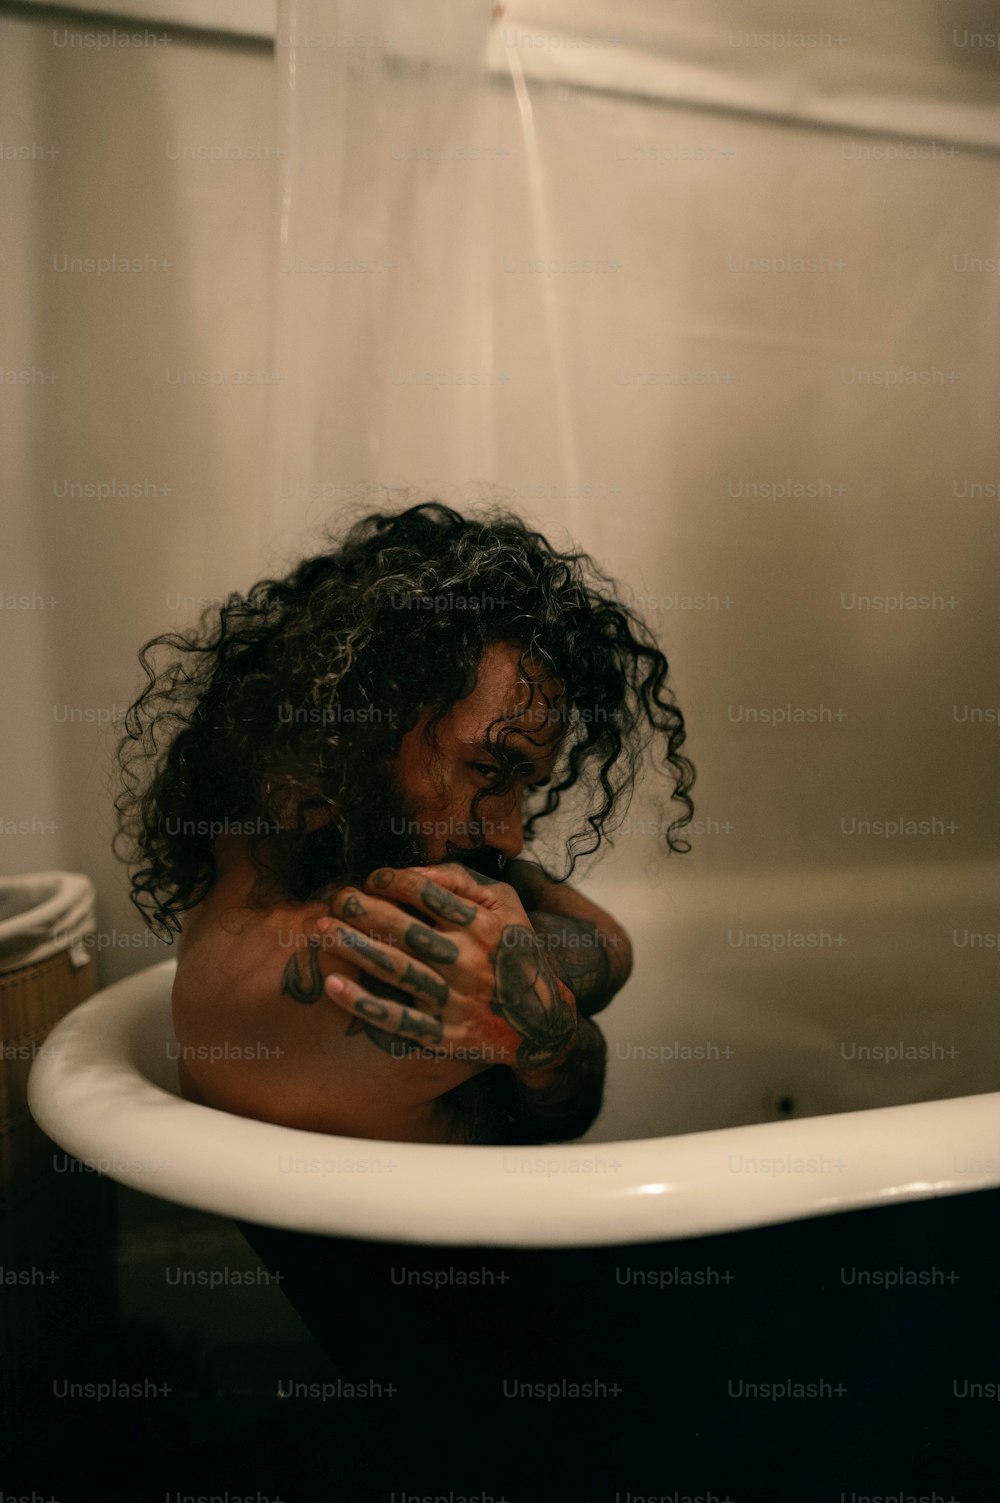 a man covered in tattoos sitting in a bathtub